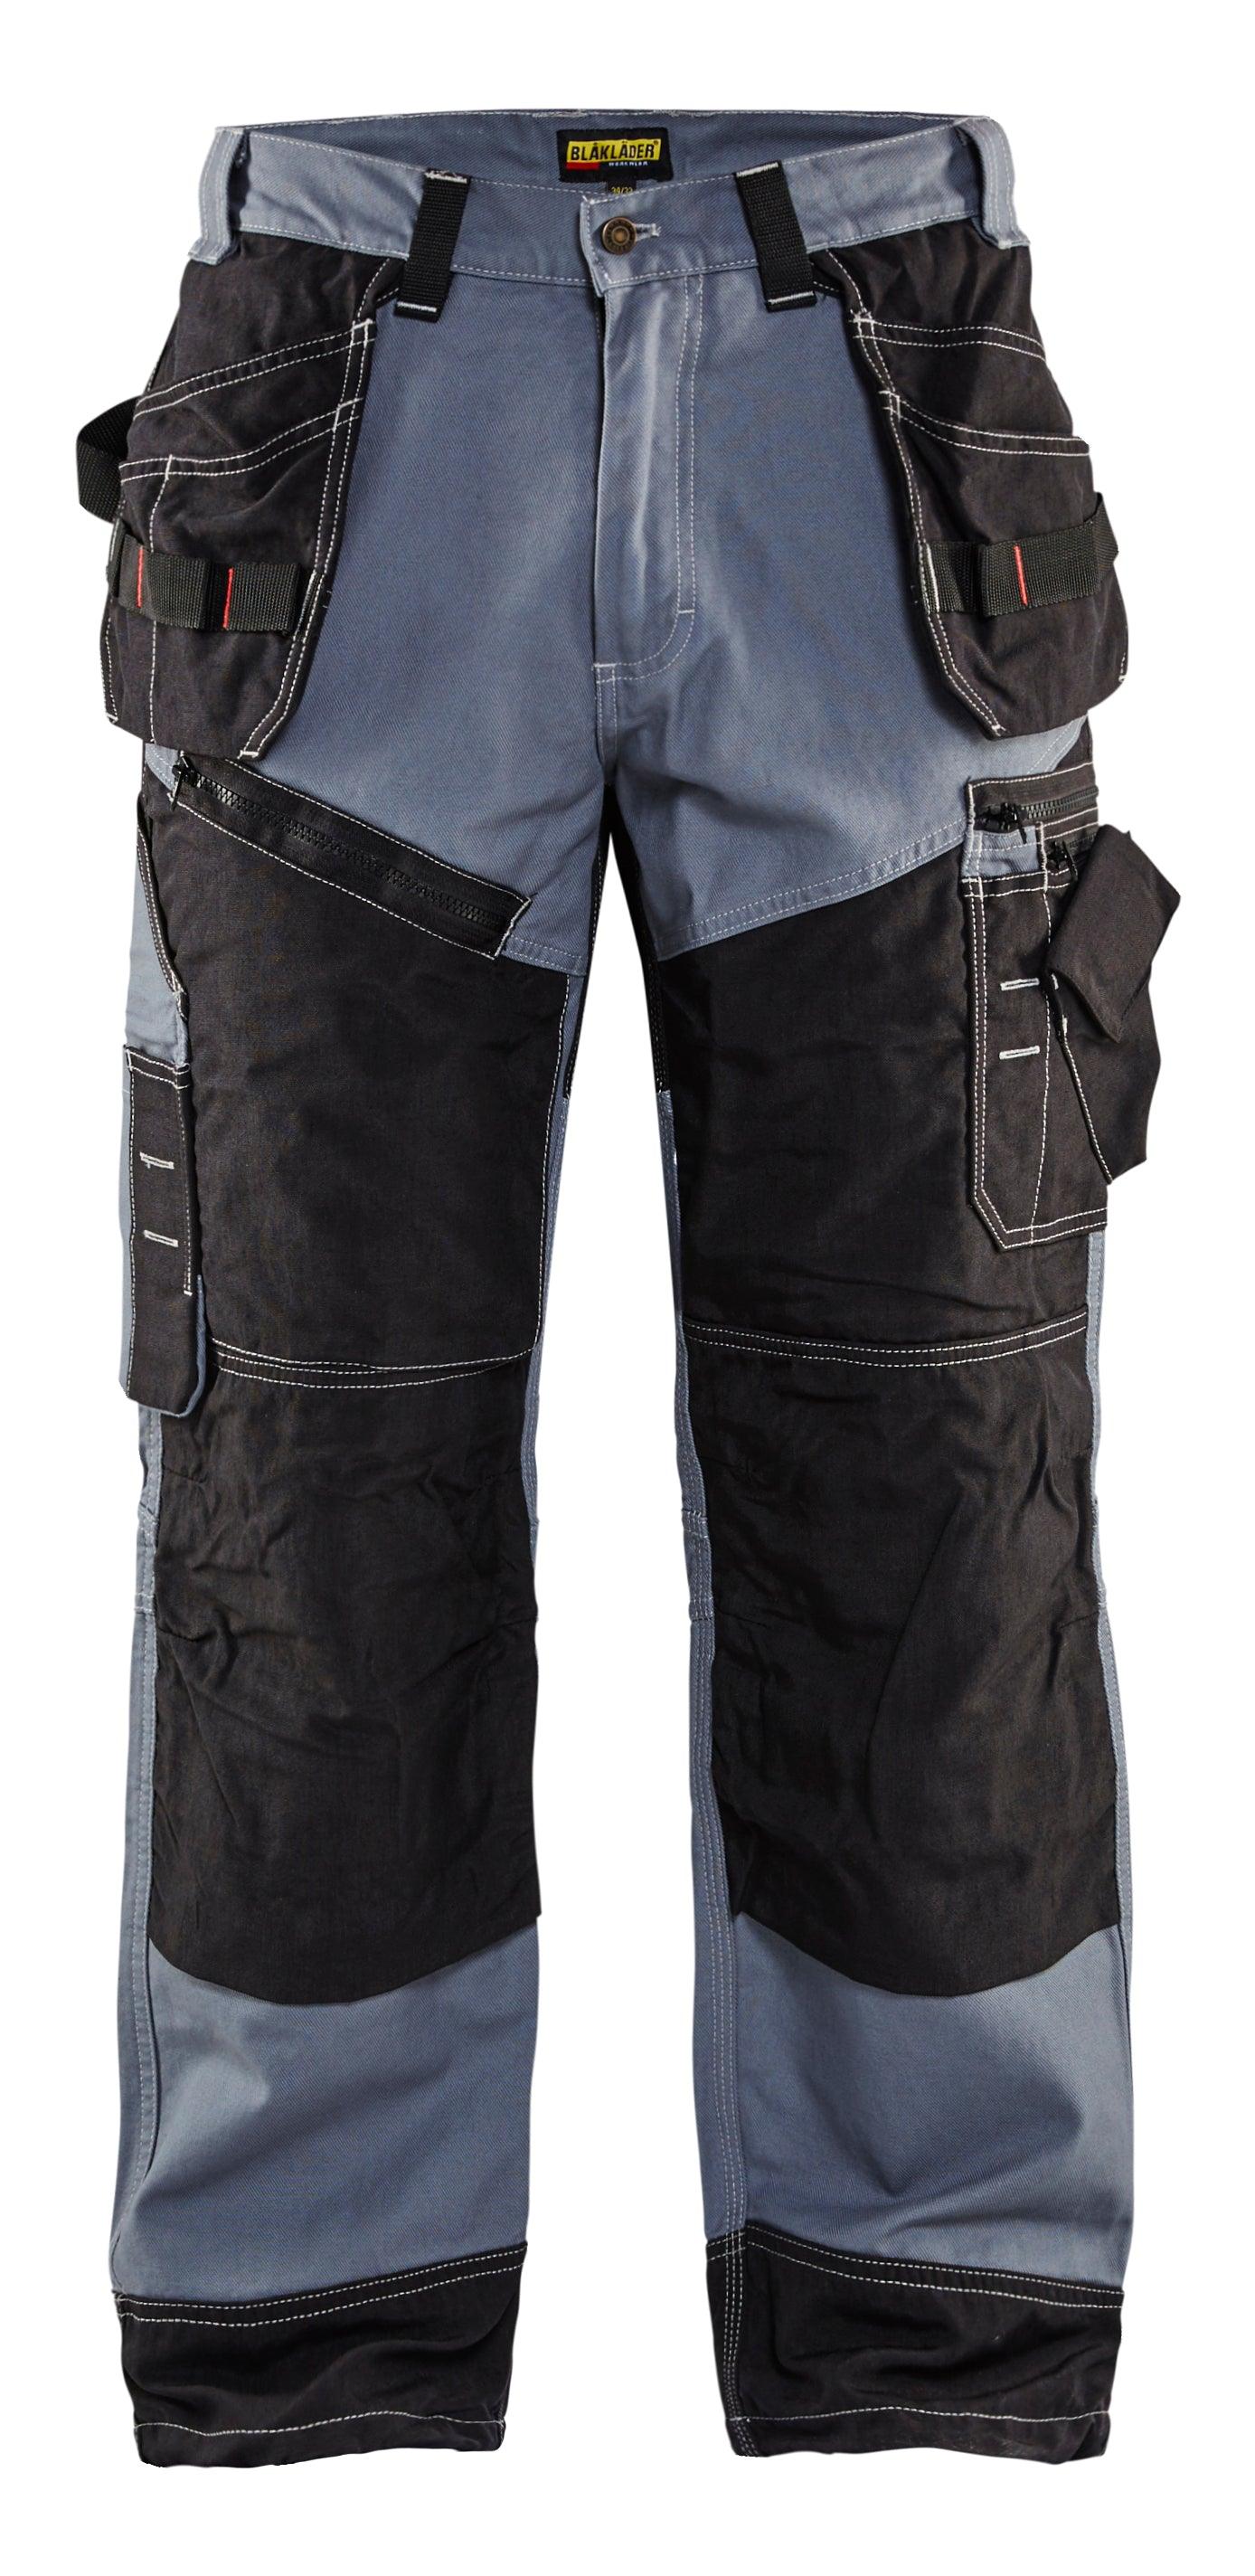 Blaklader 1600 Reinforced 11oz Cotton Work Pants - Grey/Black - Trusted Gear Company LLC